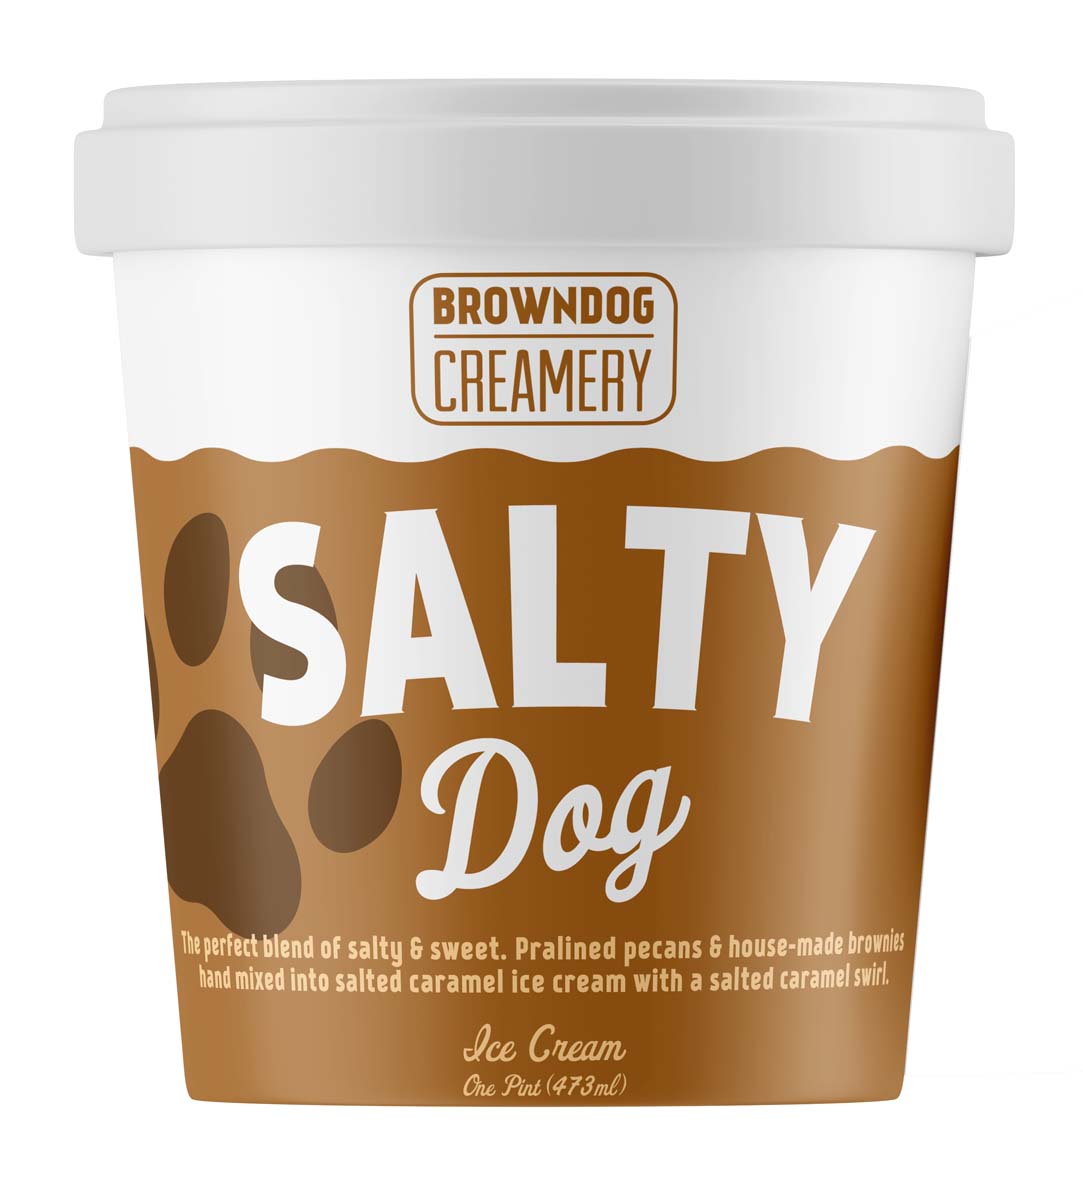 Browndog Creamery Salty Dog Ice Cream Pint | Dashmart